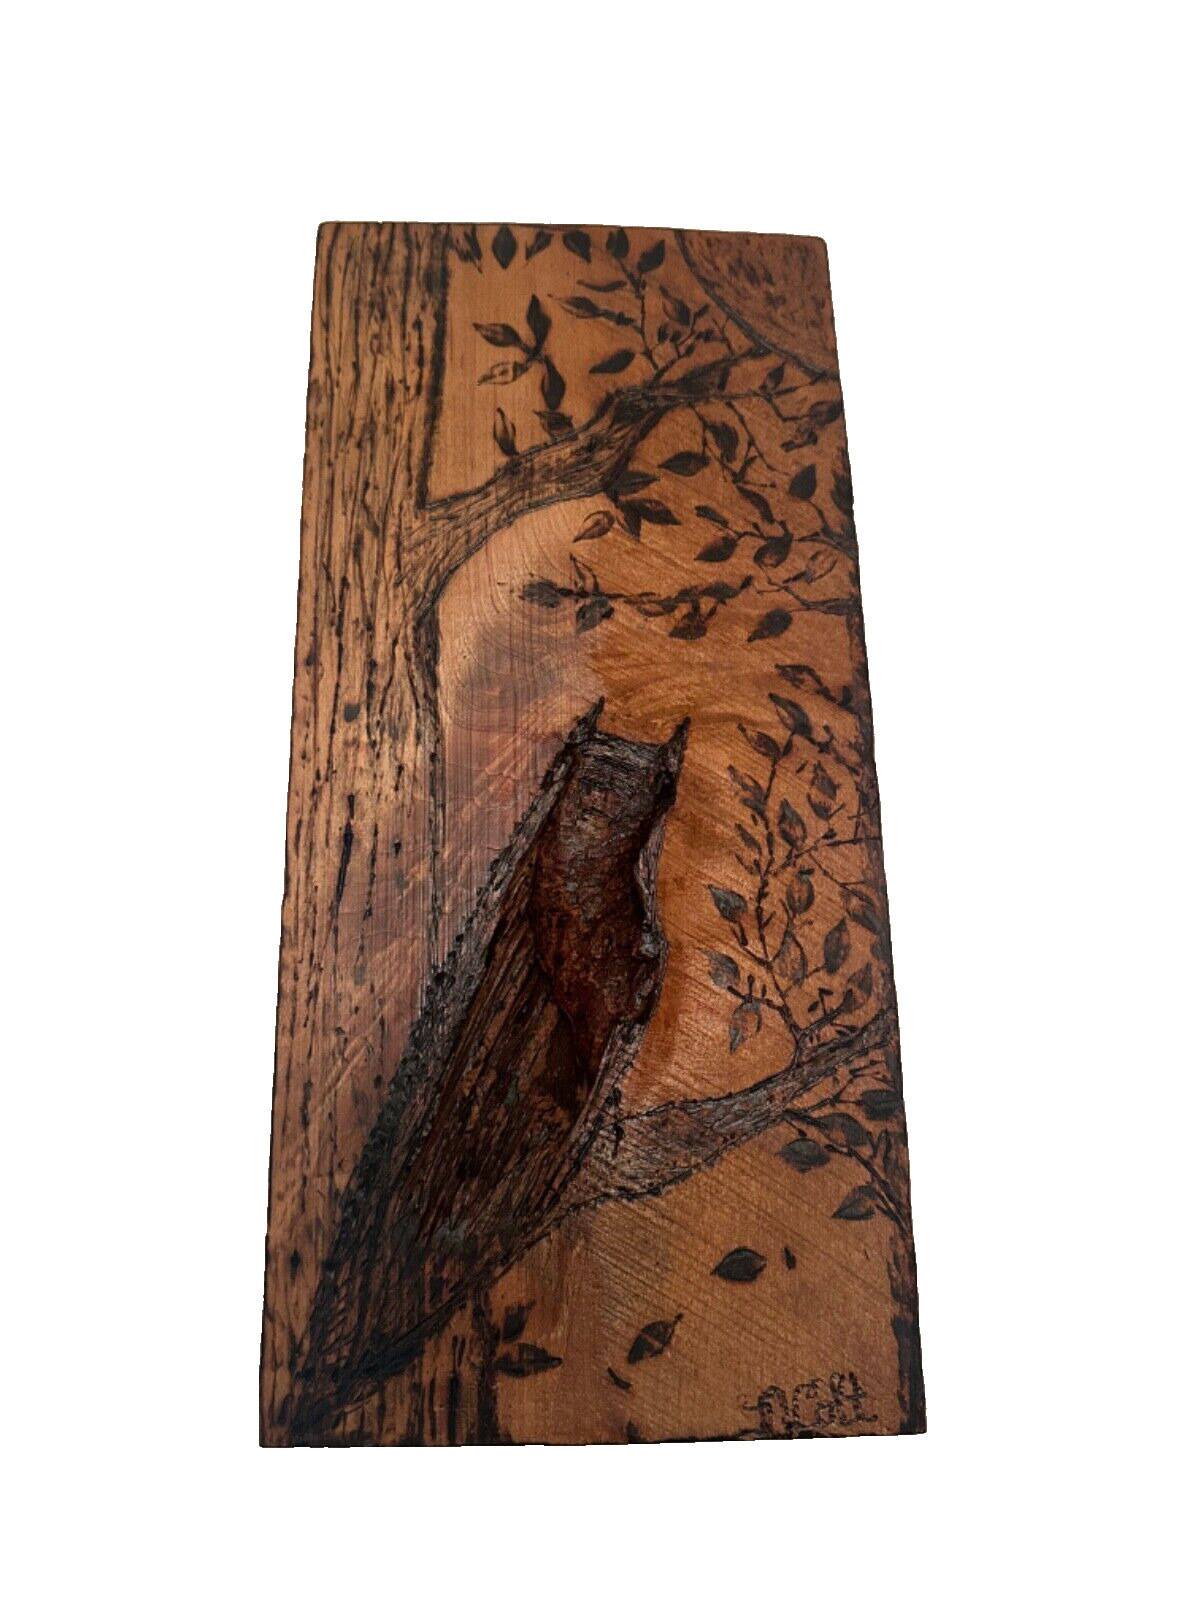 Vtg Folk Art Hand Carved Wood OWL NATURE Panel Mural Wall Plaque